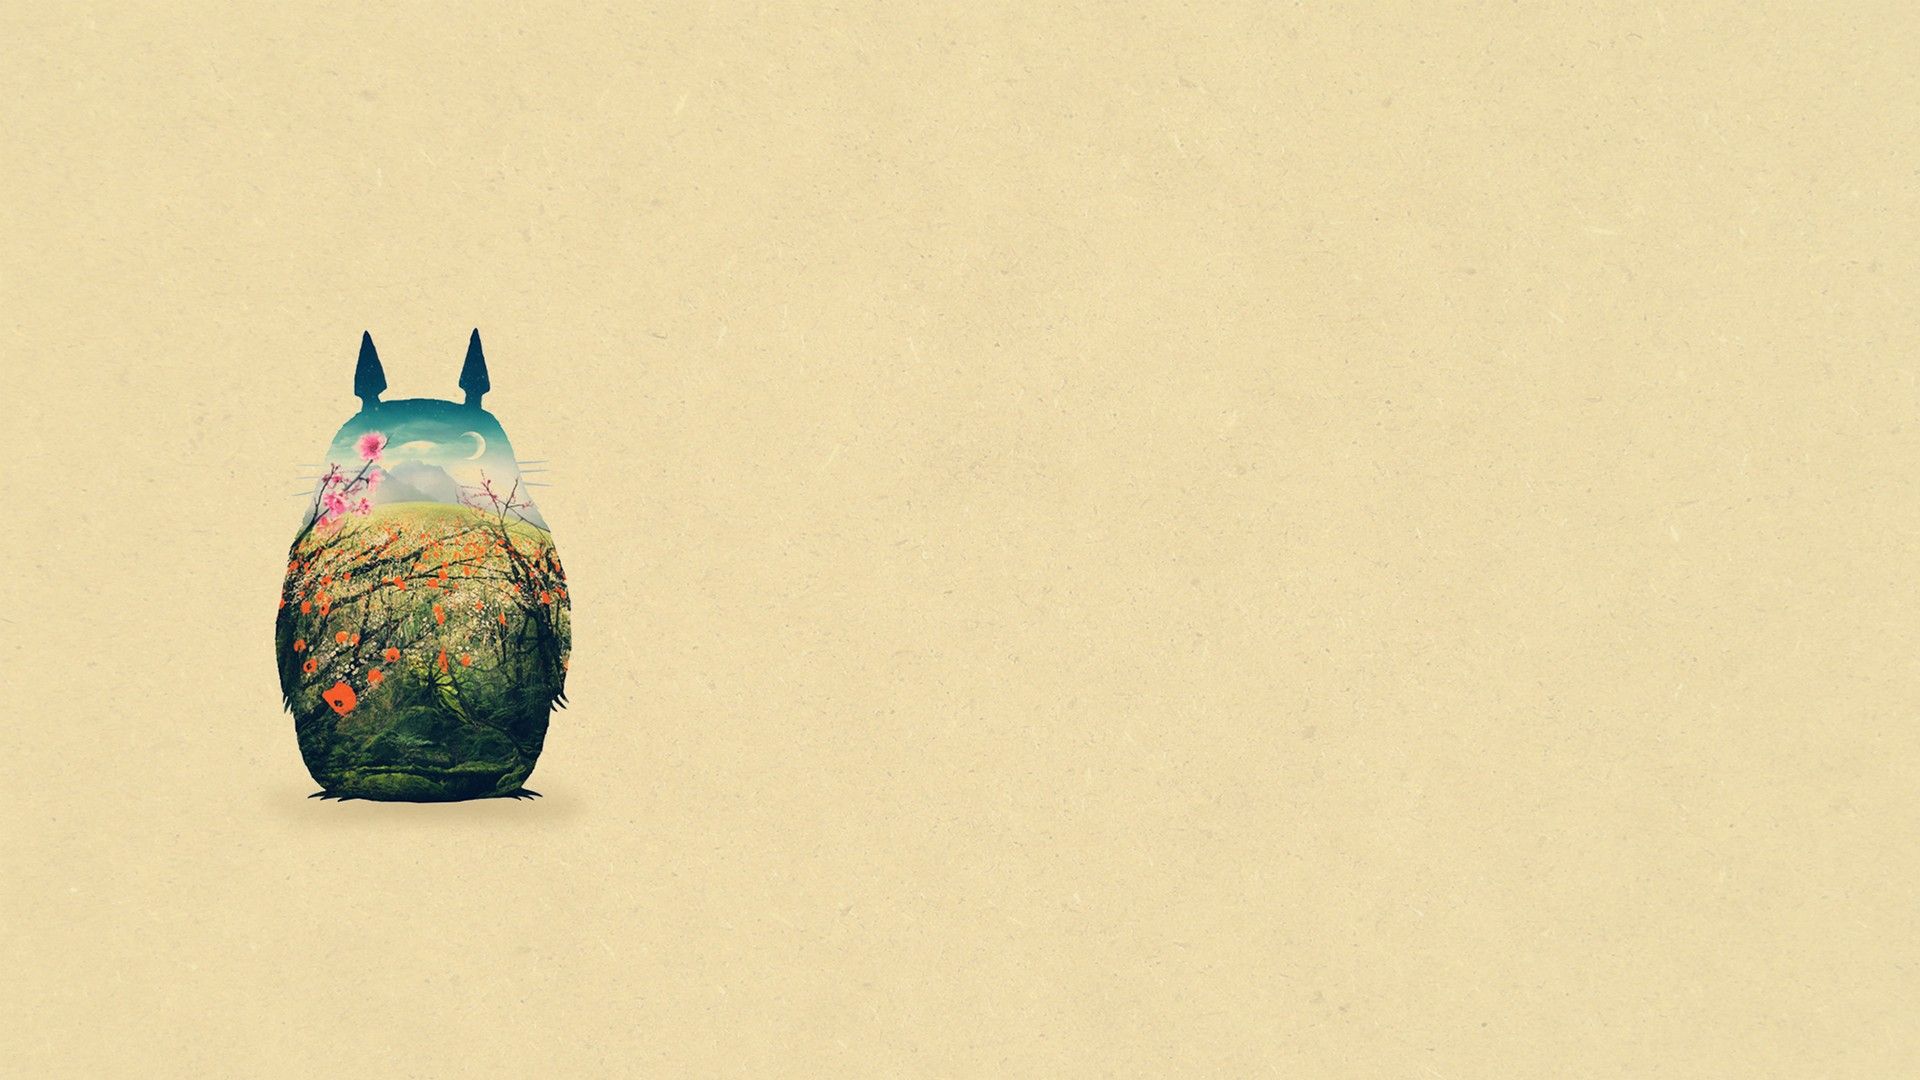 Totoro Background free download